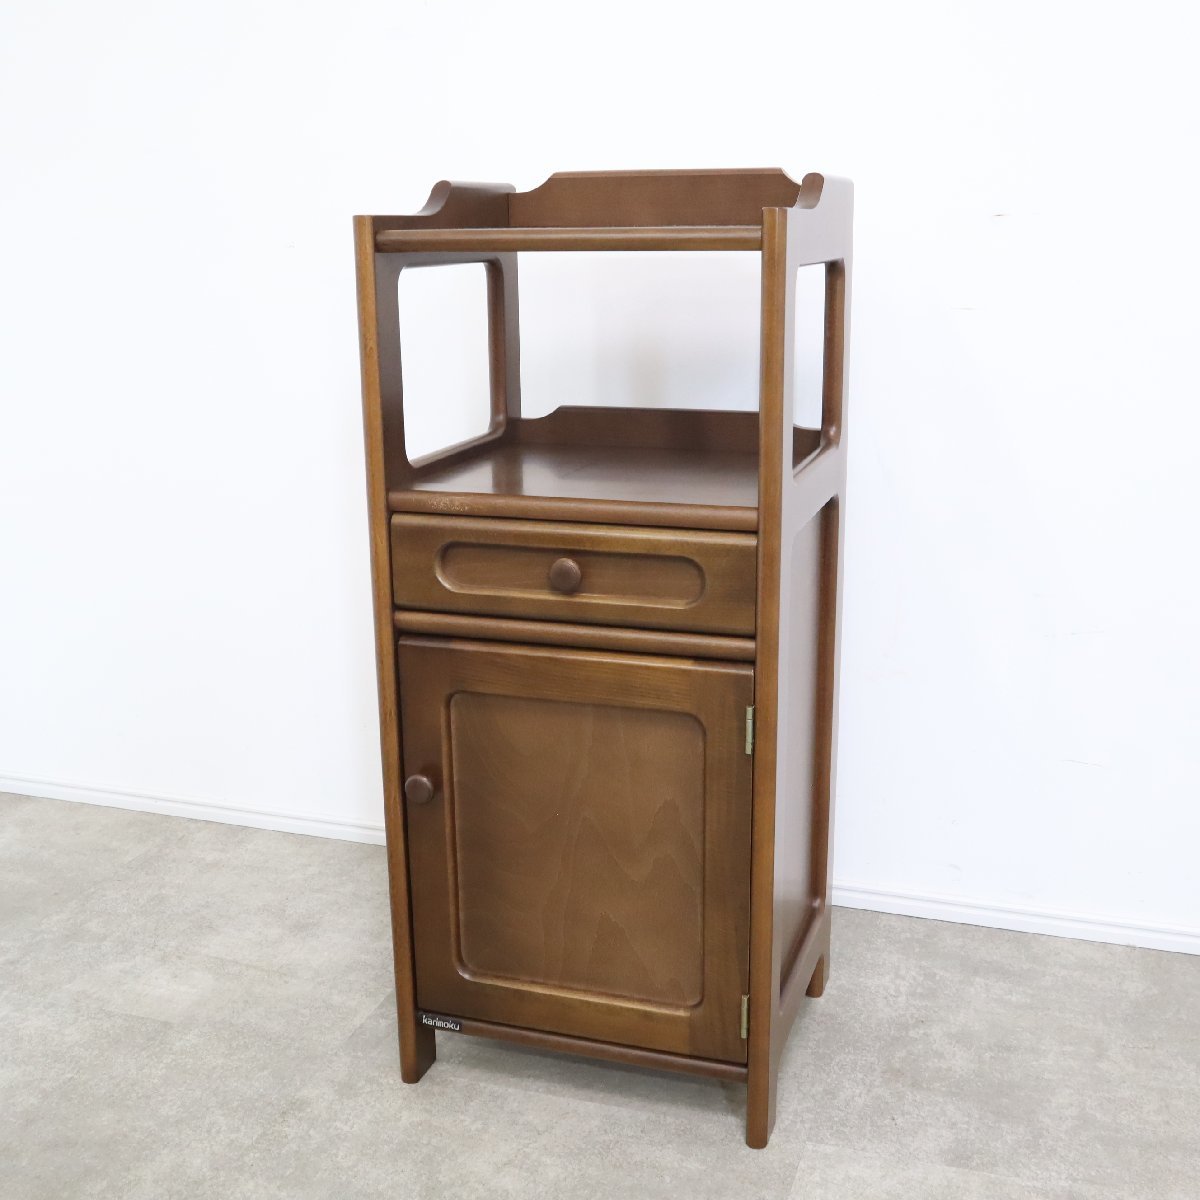  Karimoku Furniture karimoku telephone stand FAX pcs interior storage shelves retro simple cabinet [06B2305050]